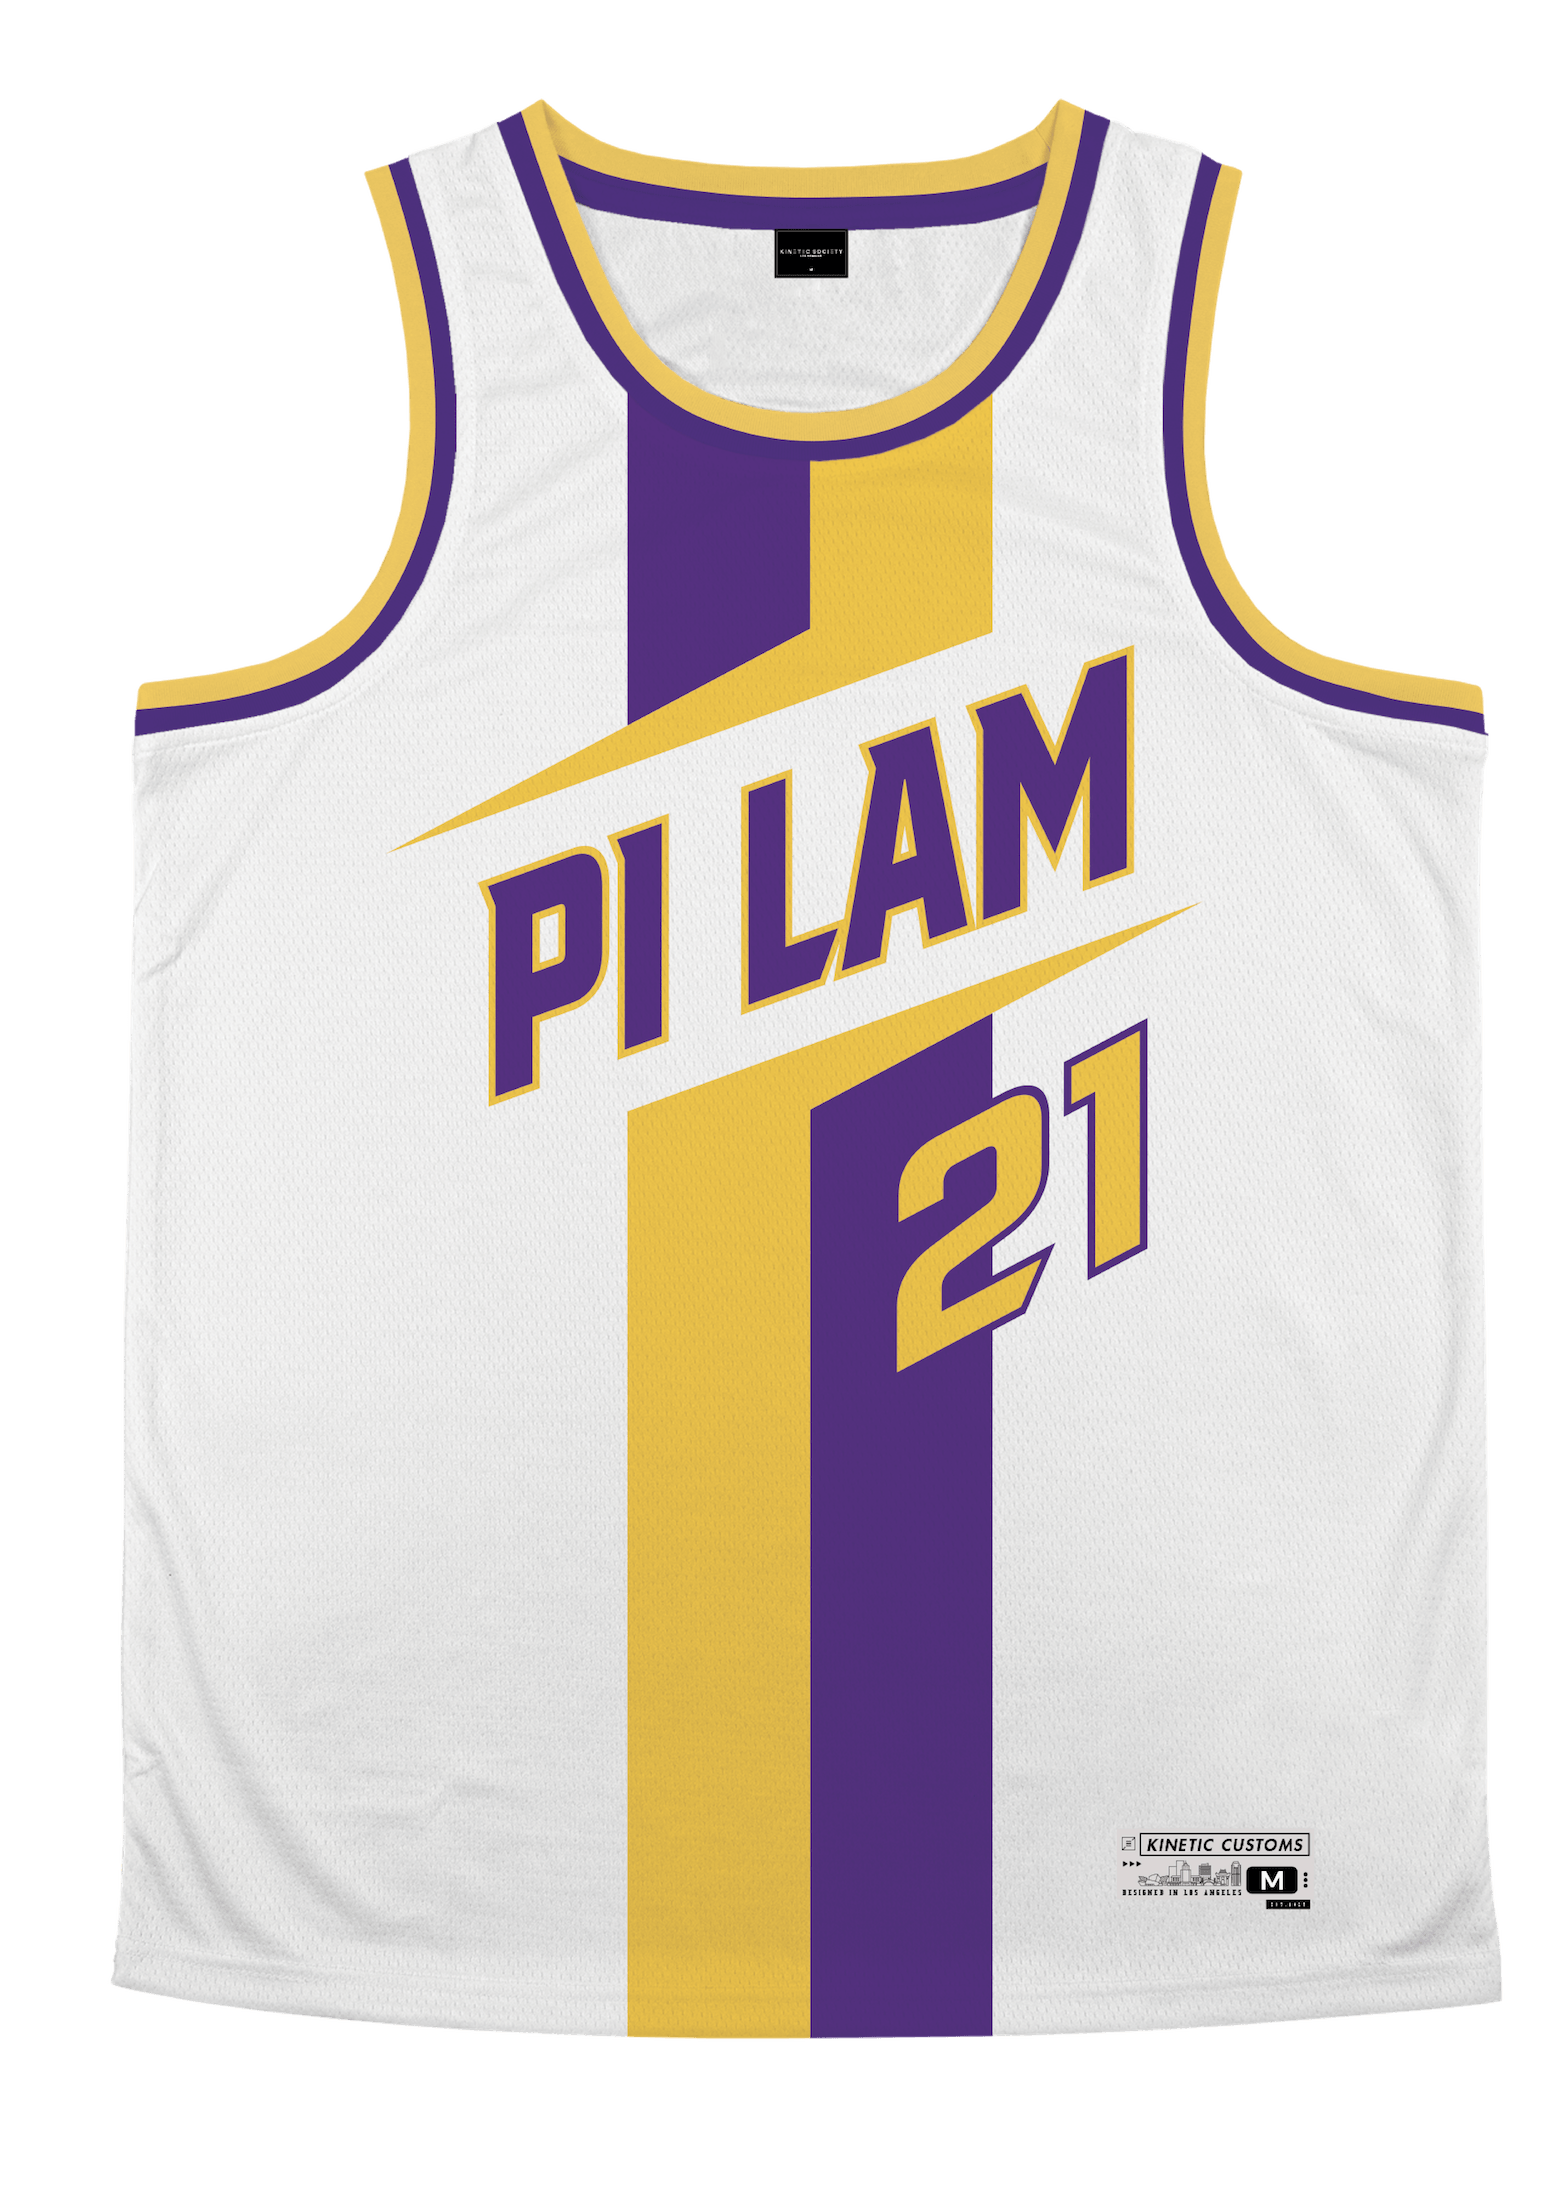 Pi Lambda Phi - Middle Child Basketball Jersey Premium Basketball Kinetic Society LLC 